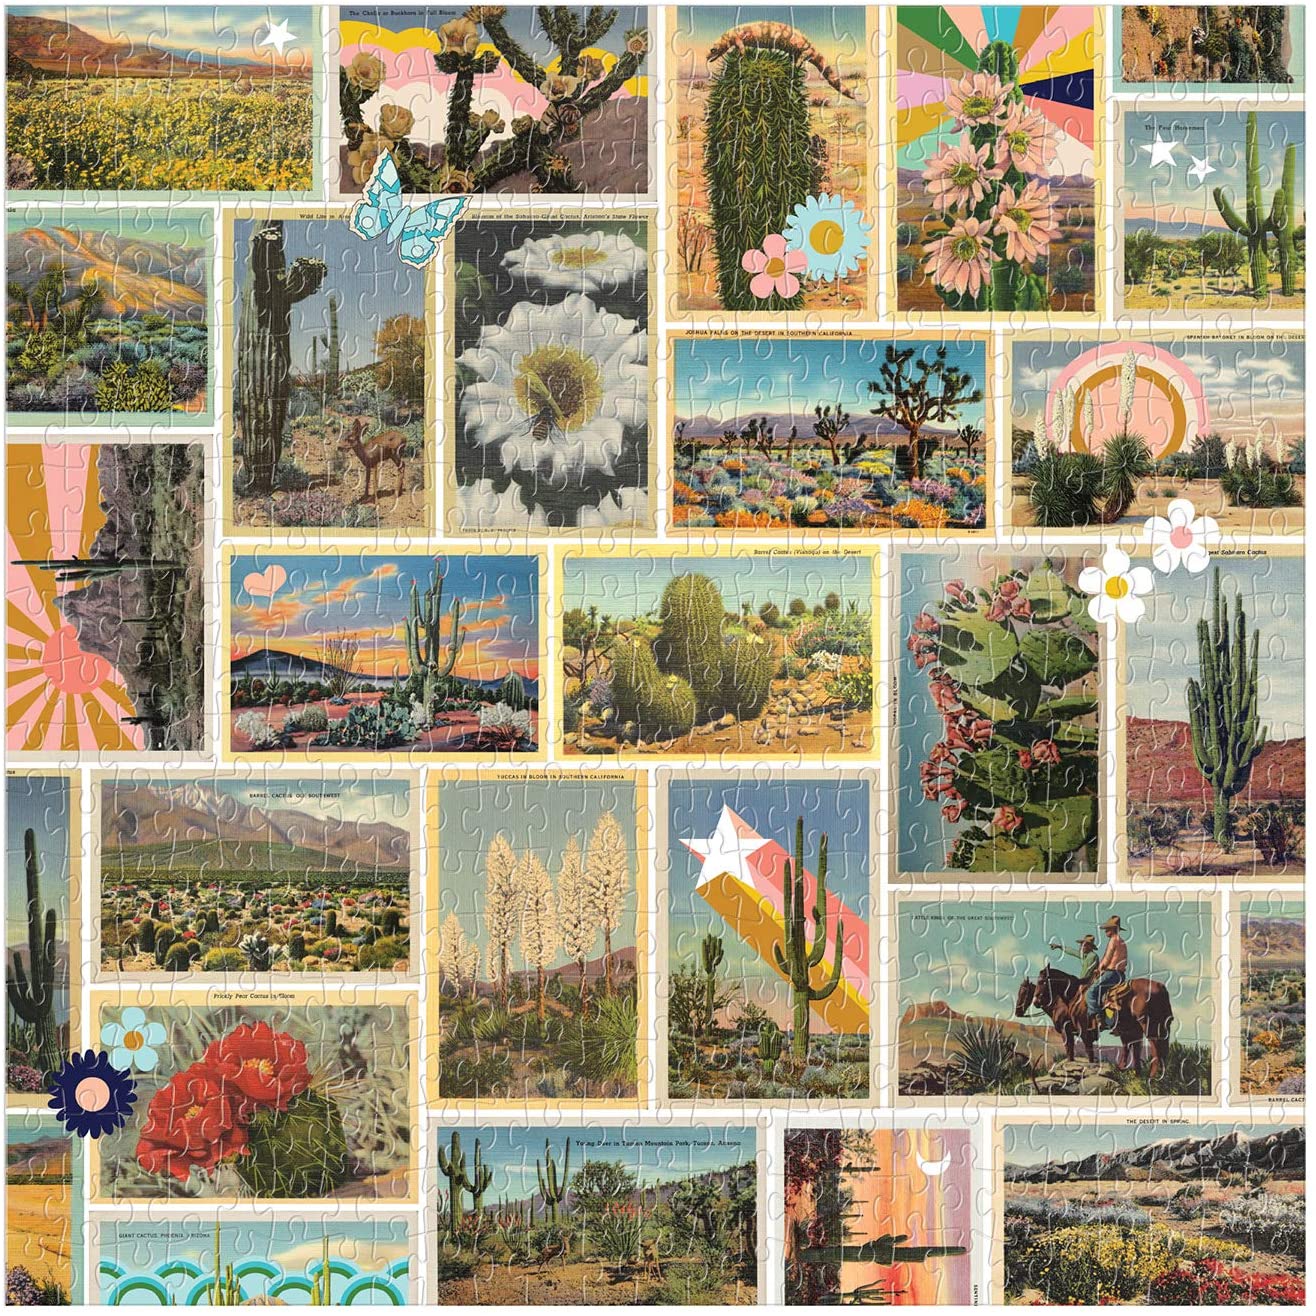 Painted Desert 500 Piece Jigsaw Puzzle